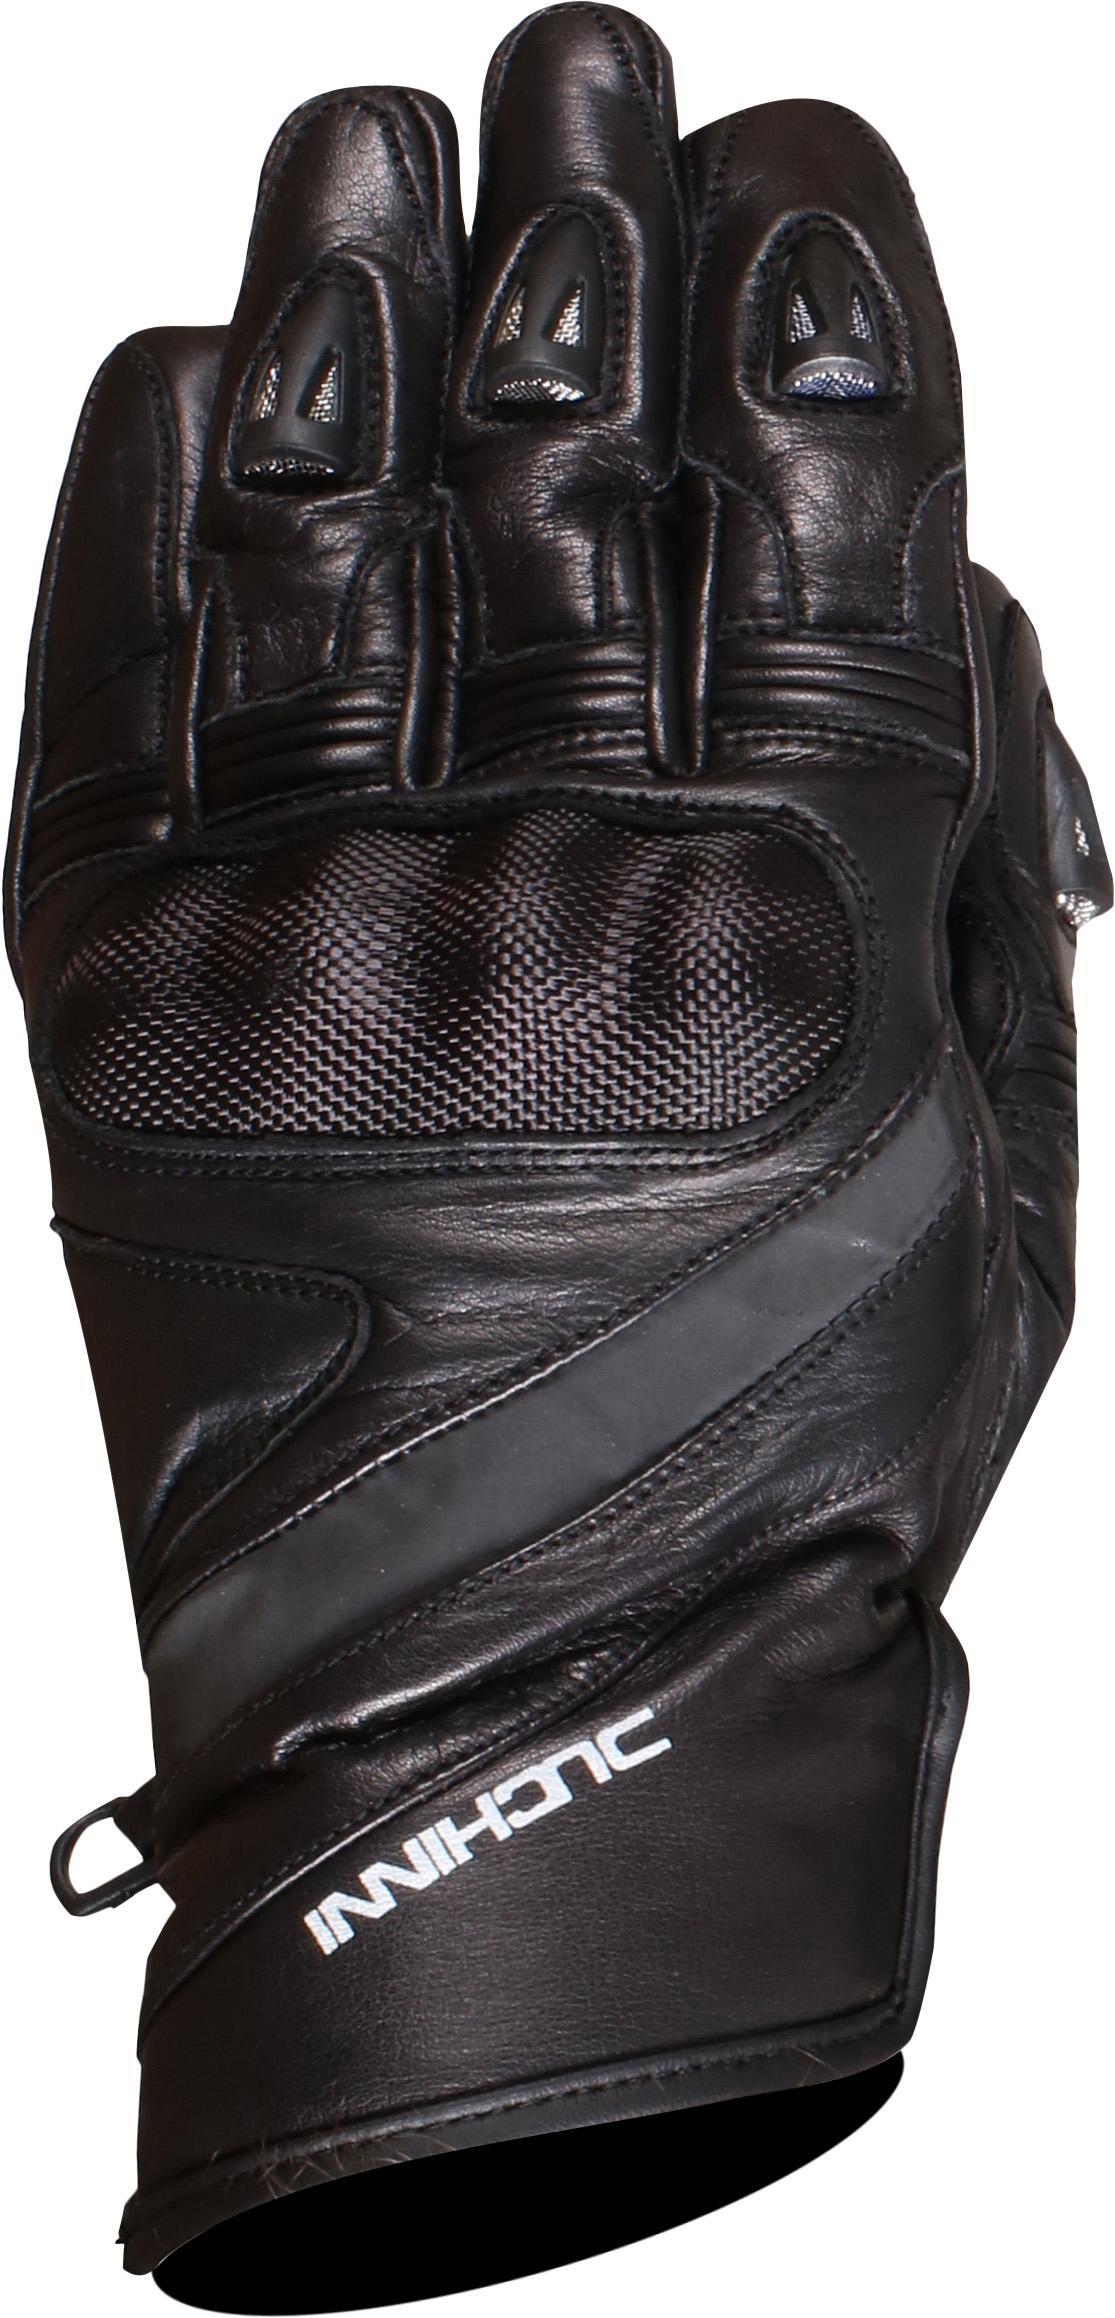 Duchinni Fresco Motorcycle Gloves - Black, M